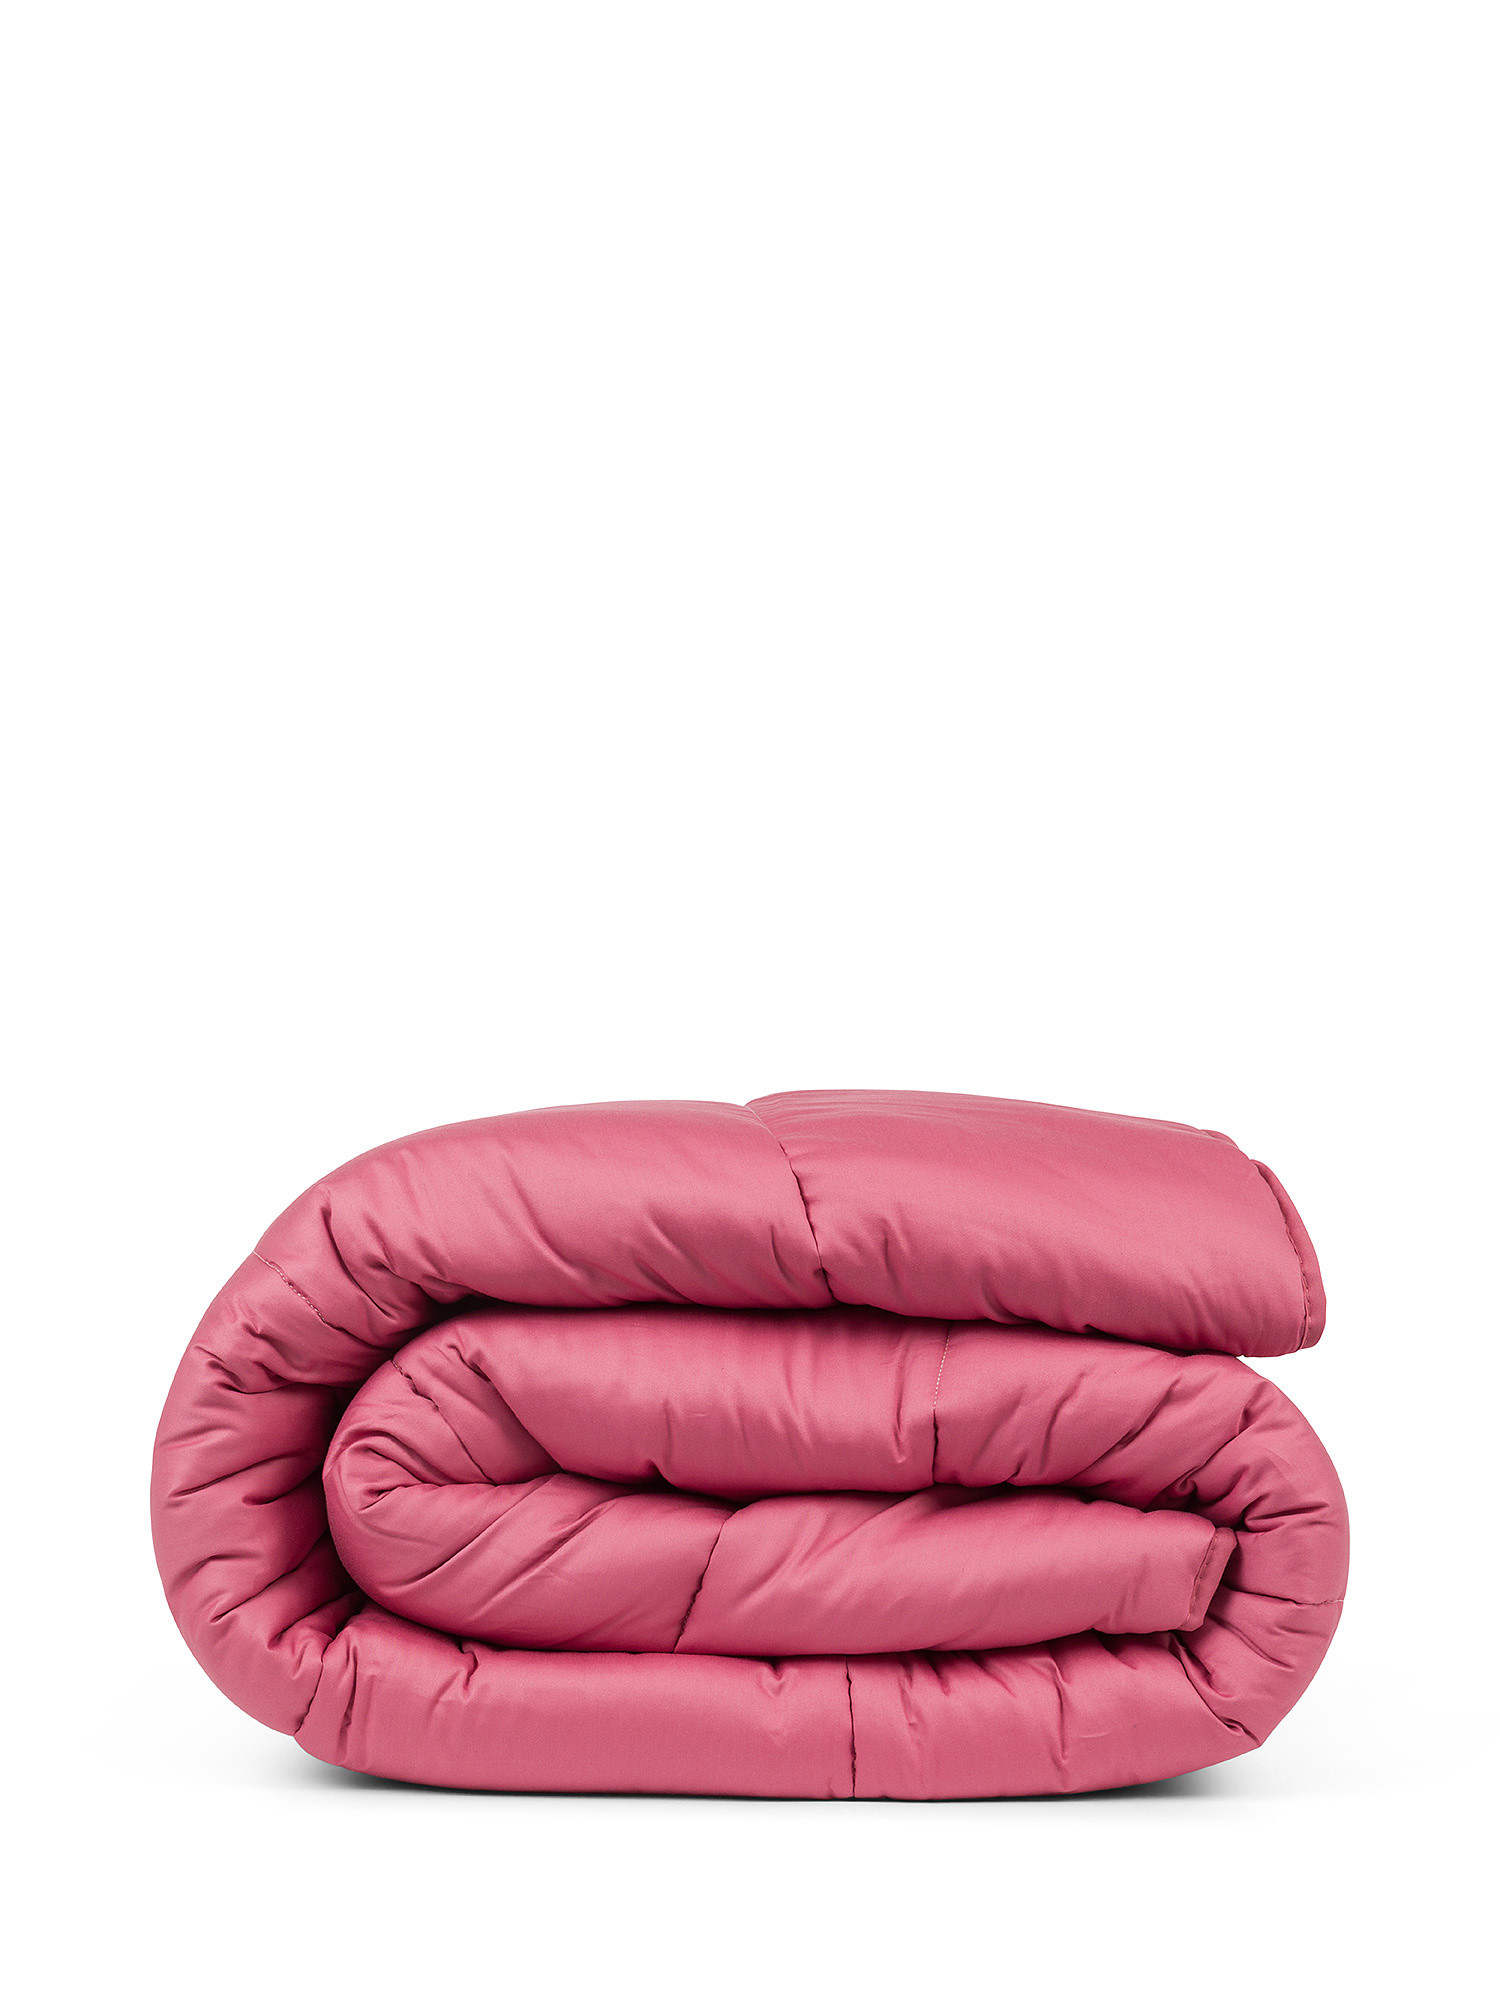 Solid color cotton satin quilt, Pink, large image number 0